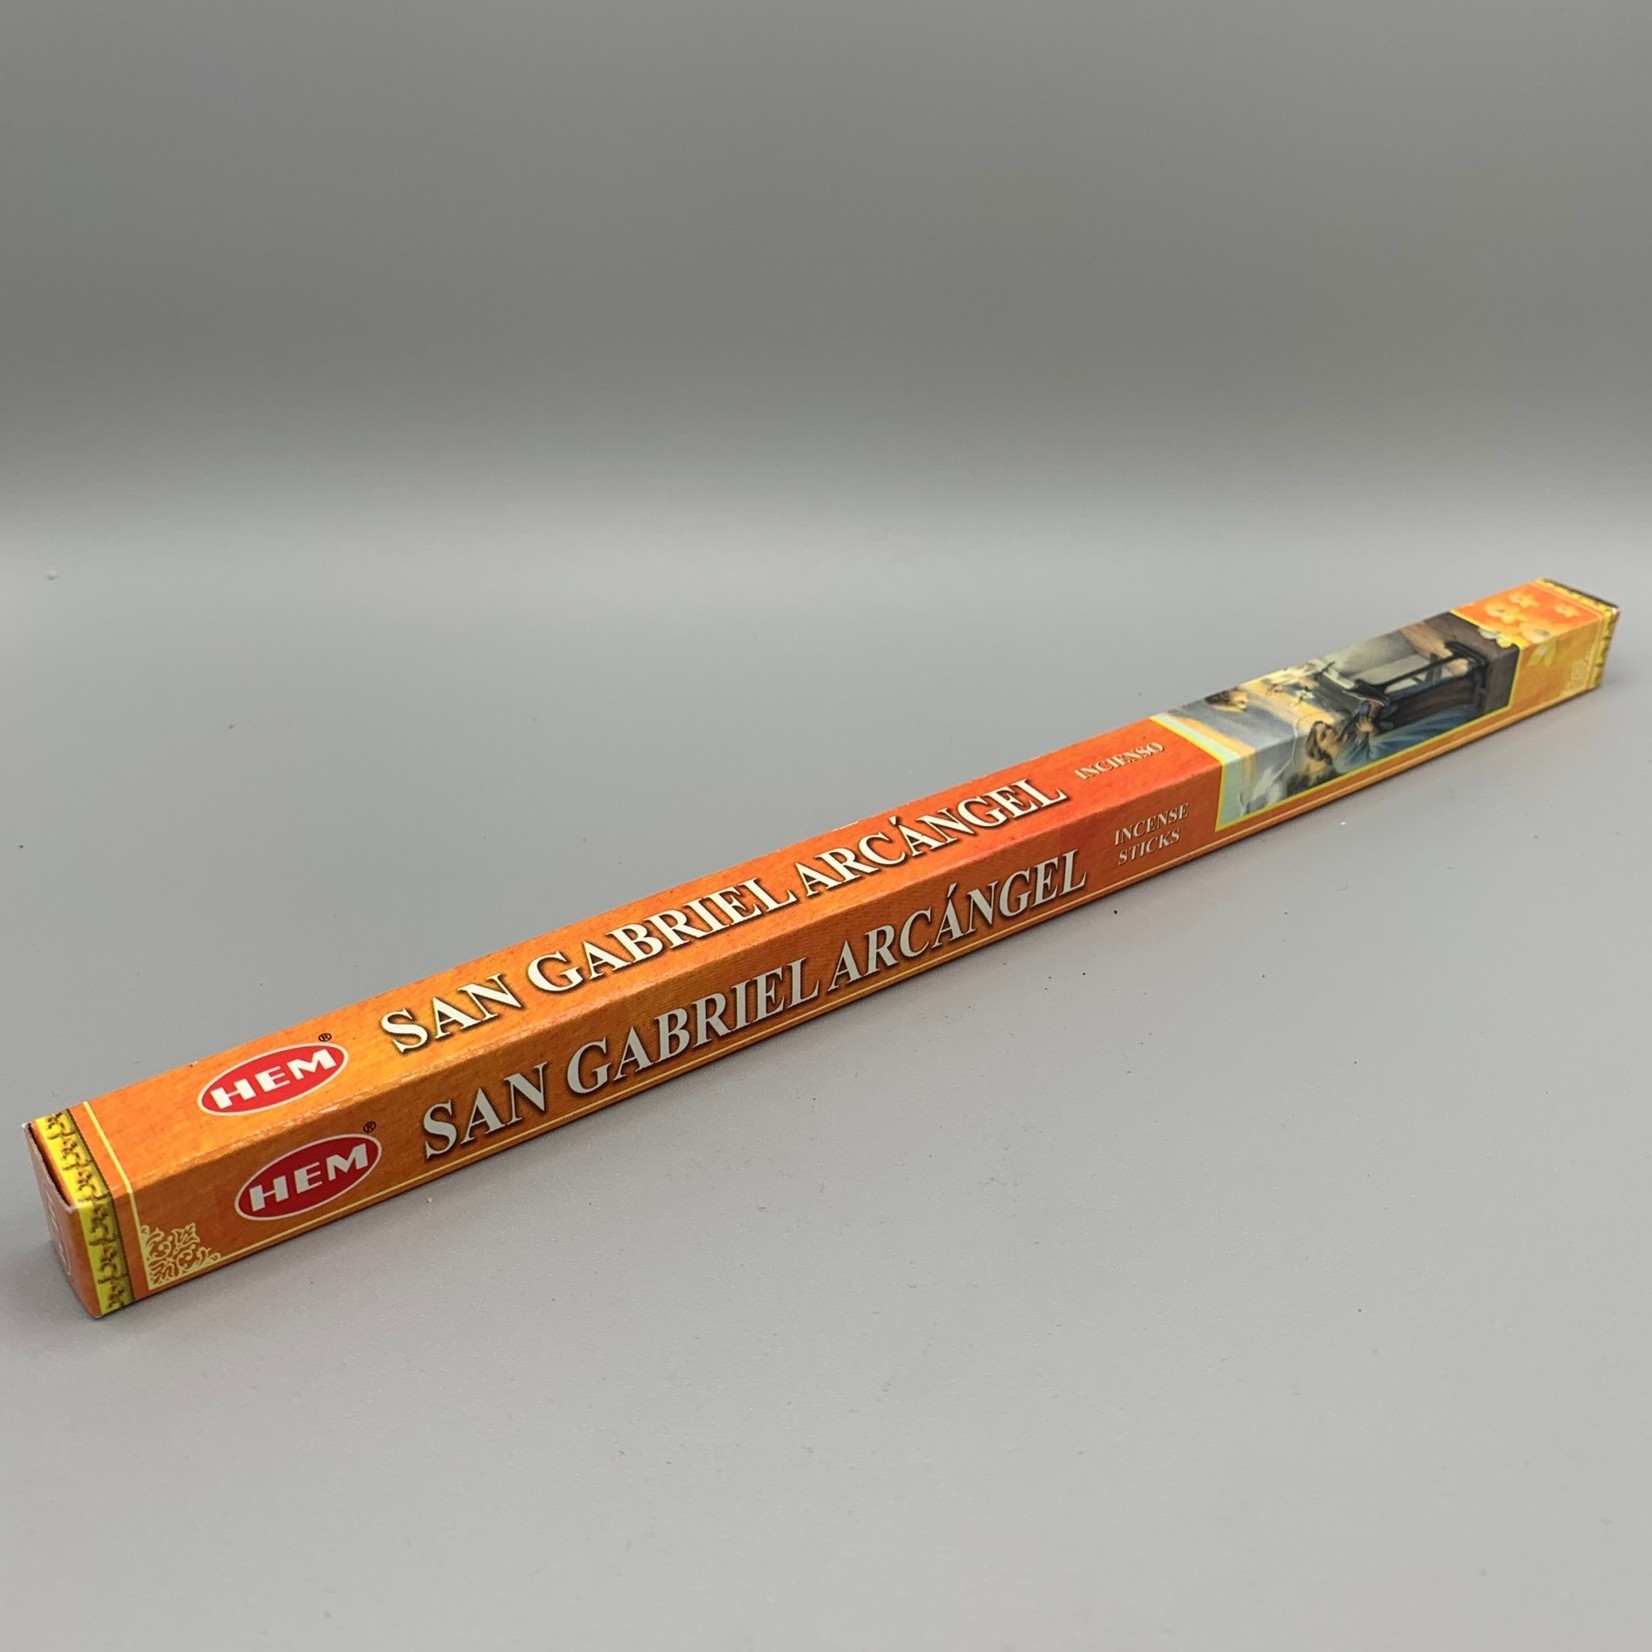 HEM Incense: San Gabriel Arcángel, 8 Sticks